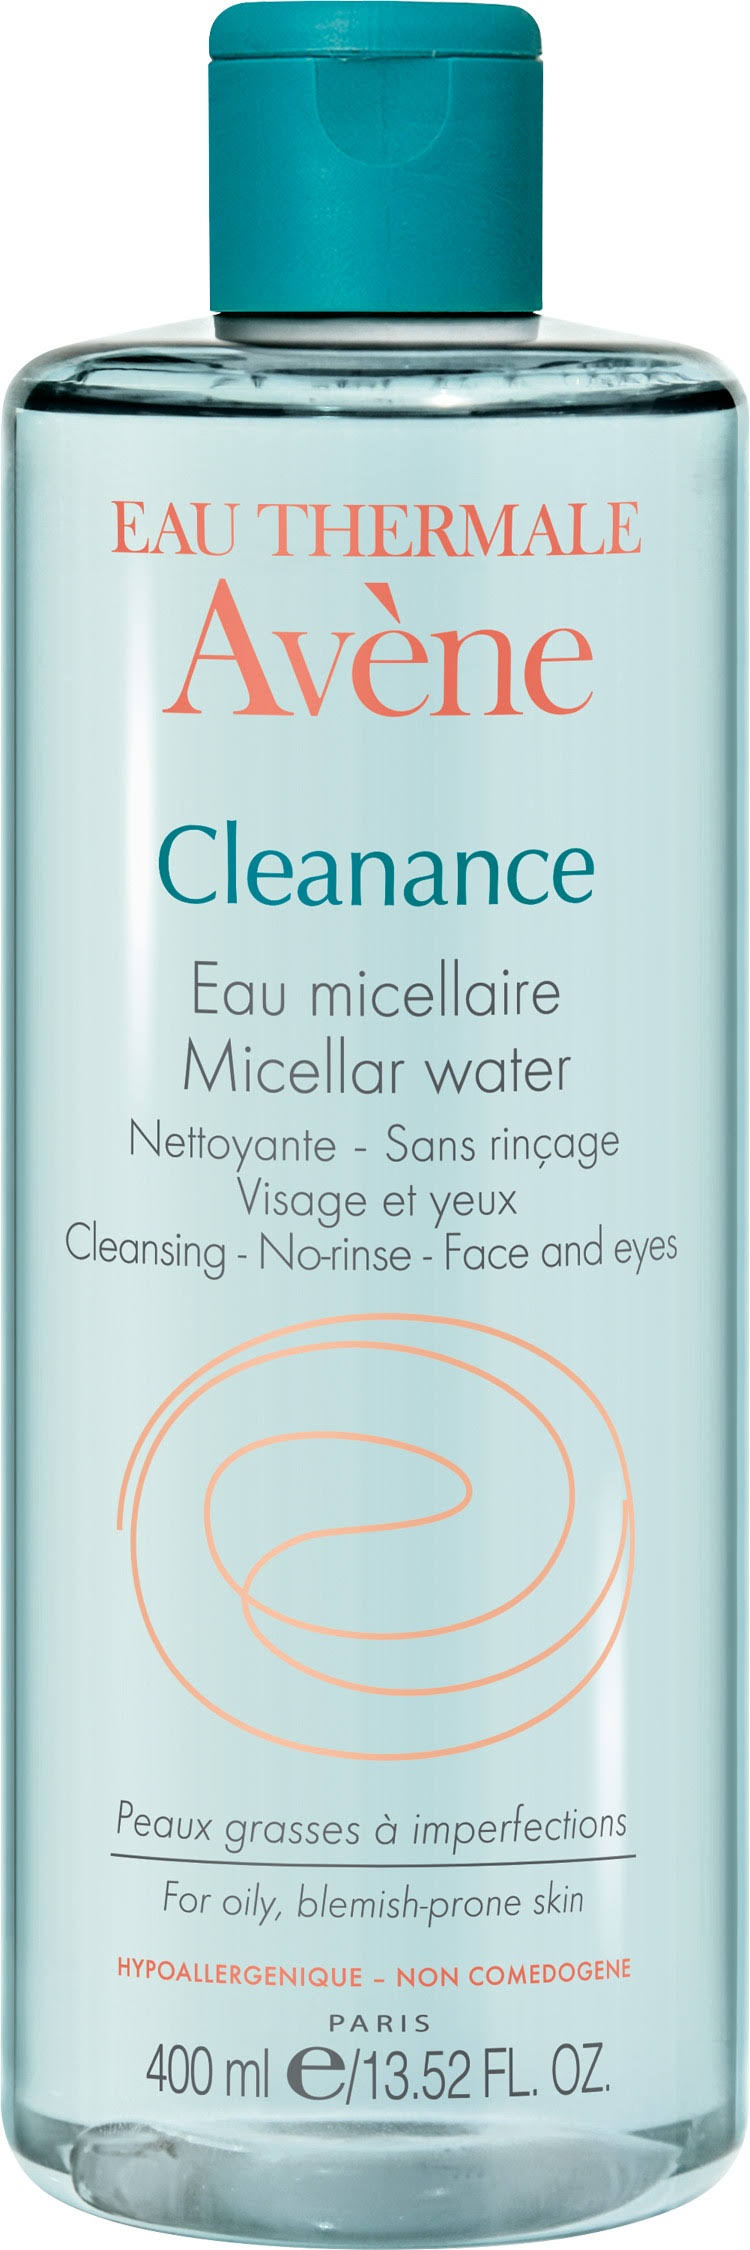 AVENE - CLEANANCE micellar water 400 ml.